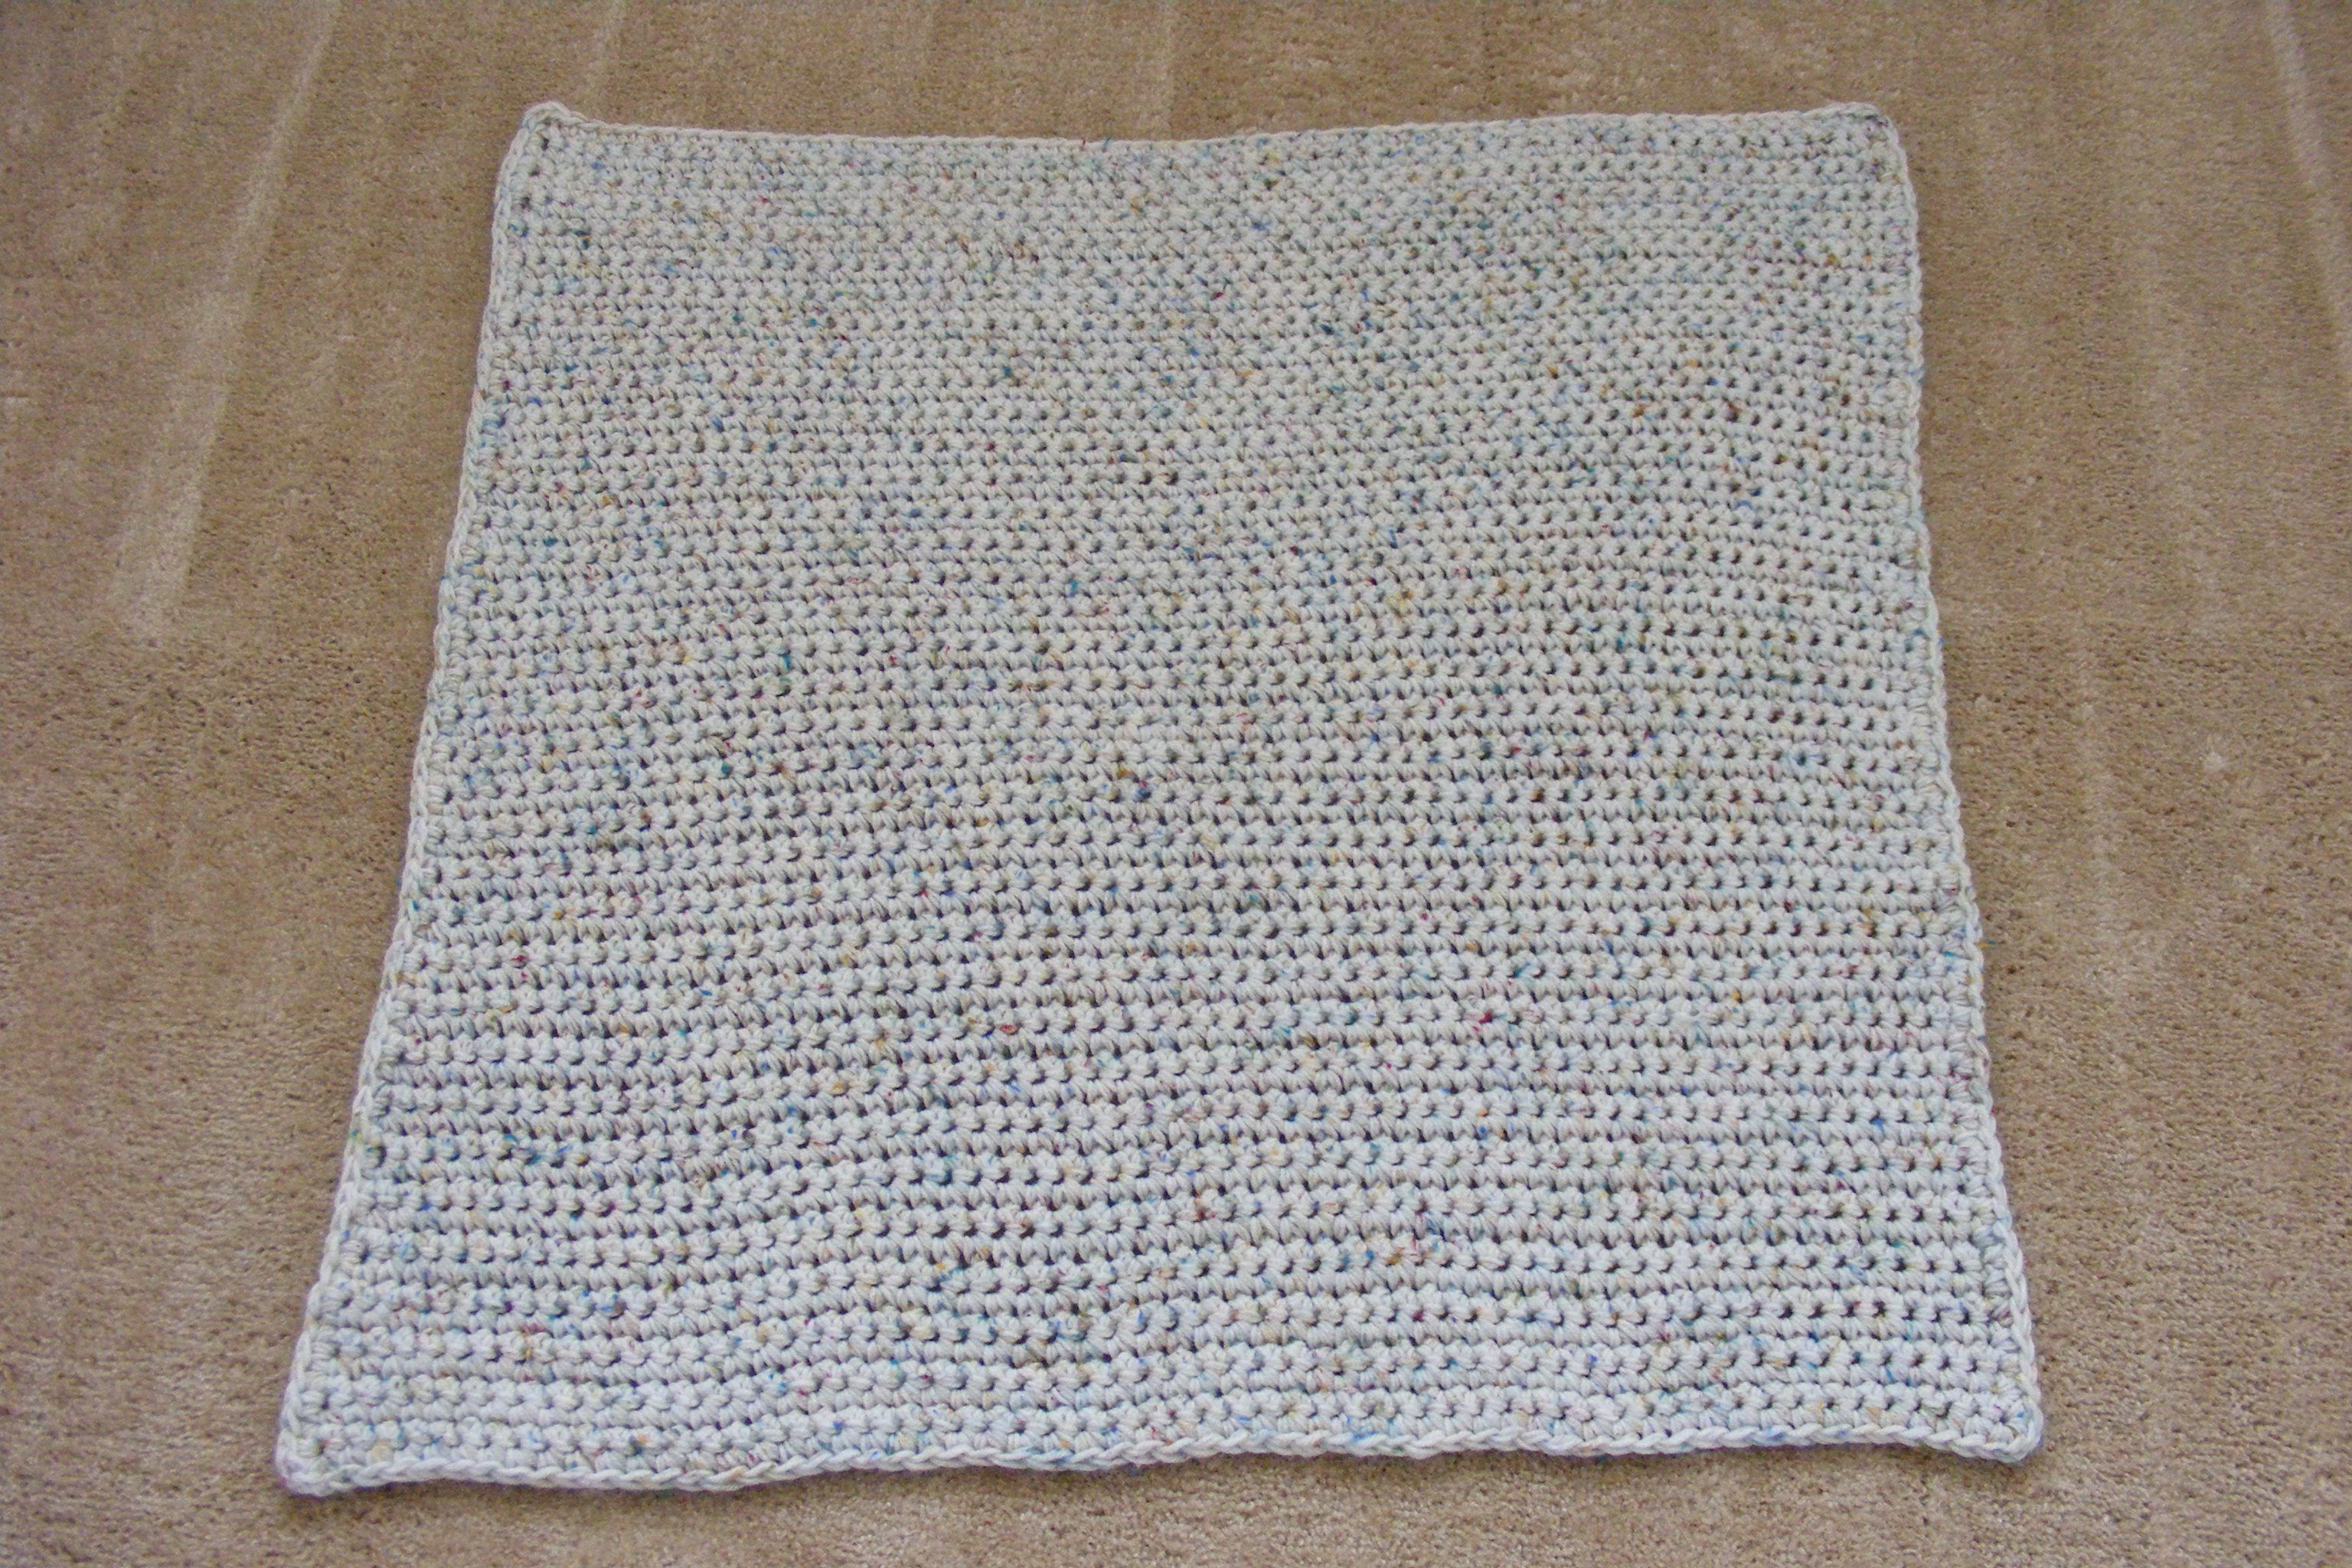 Baby Boy Crochet Blanket Patterns 15 Adorable Crochet Ba Blanket Patterns